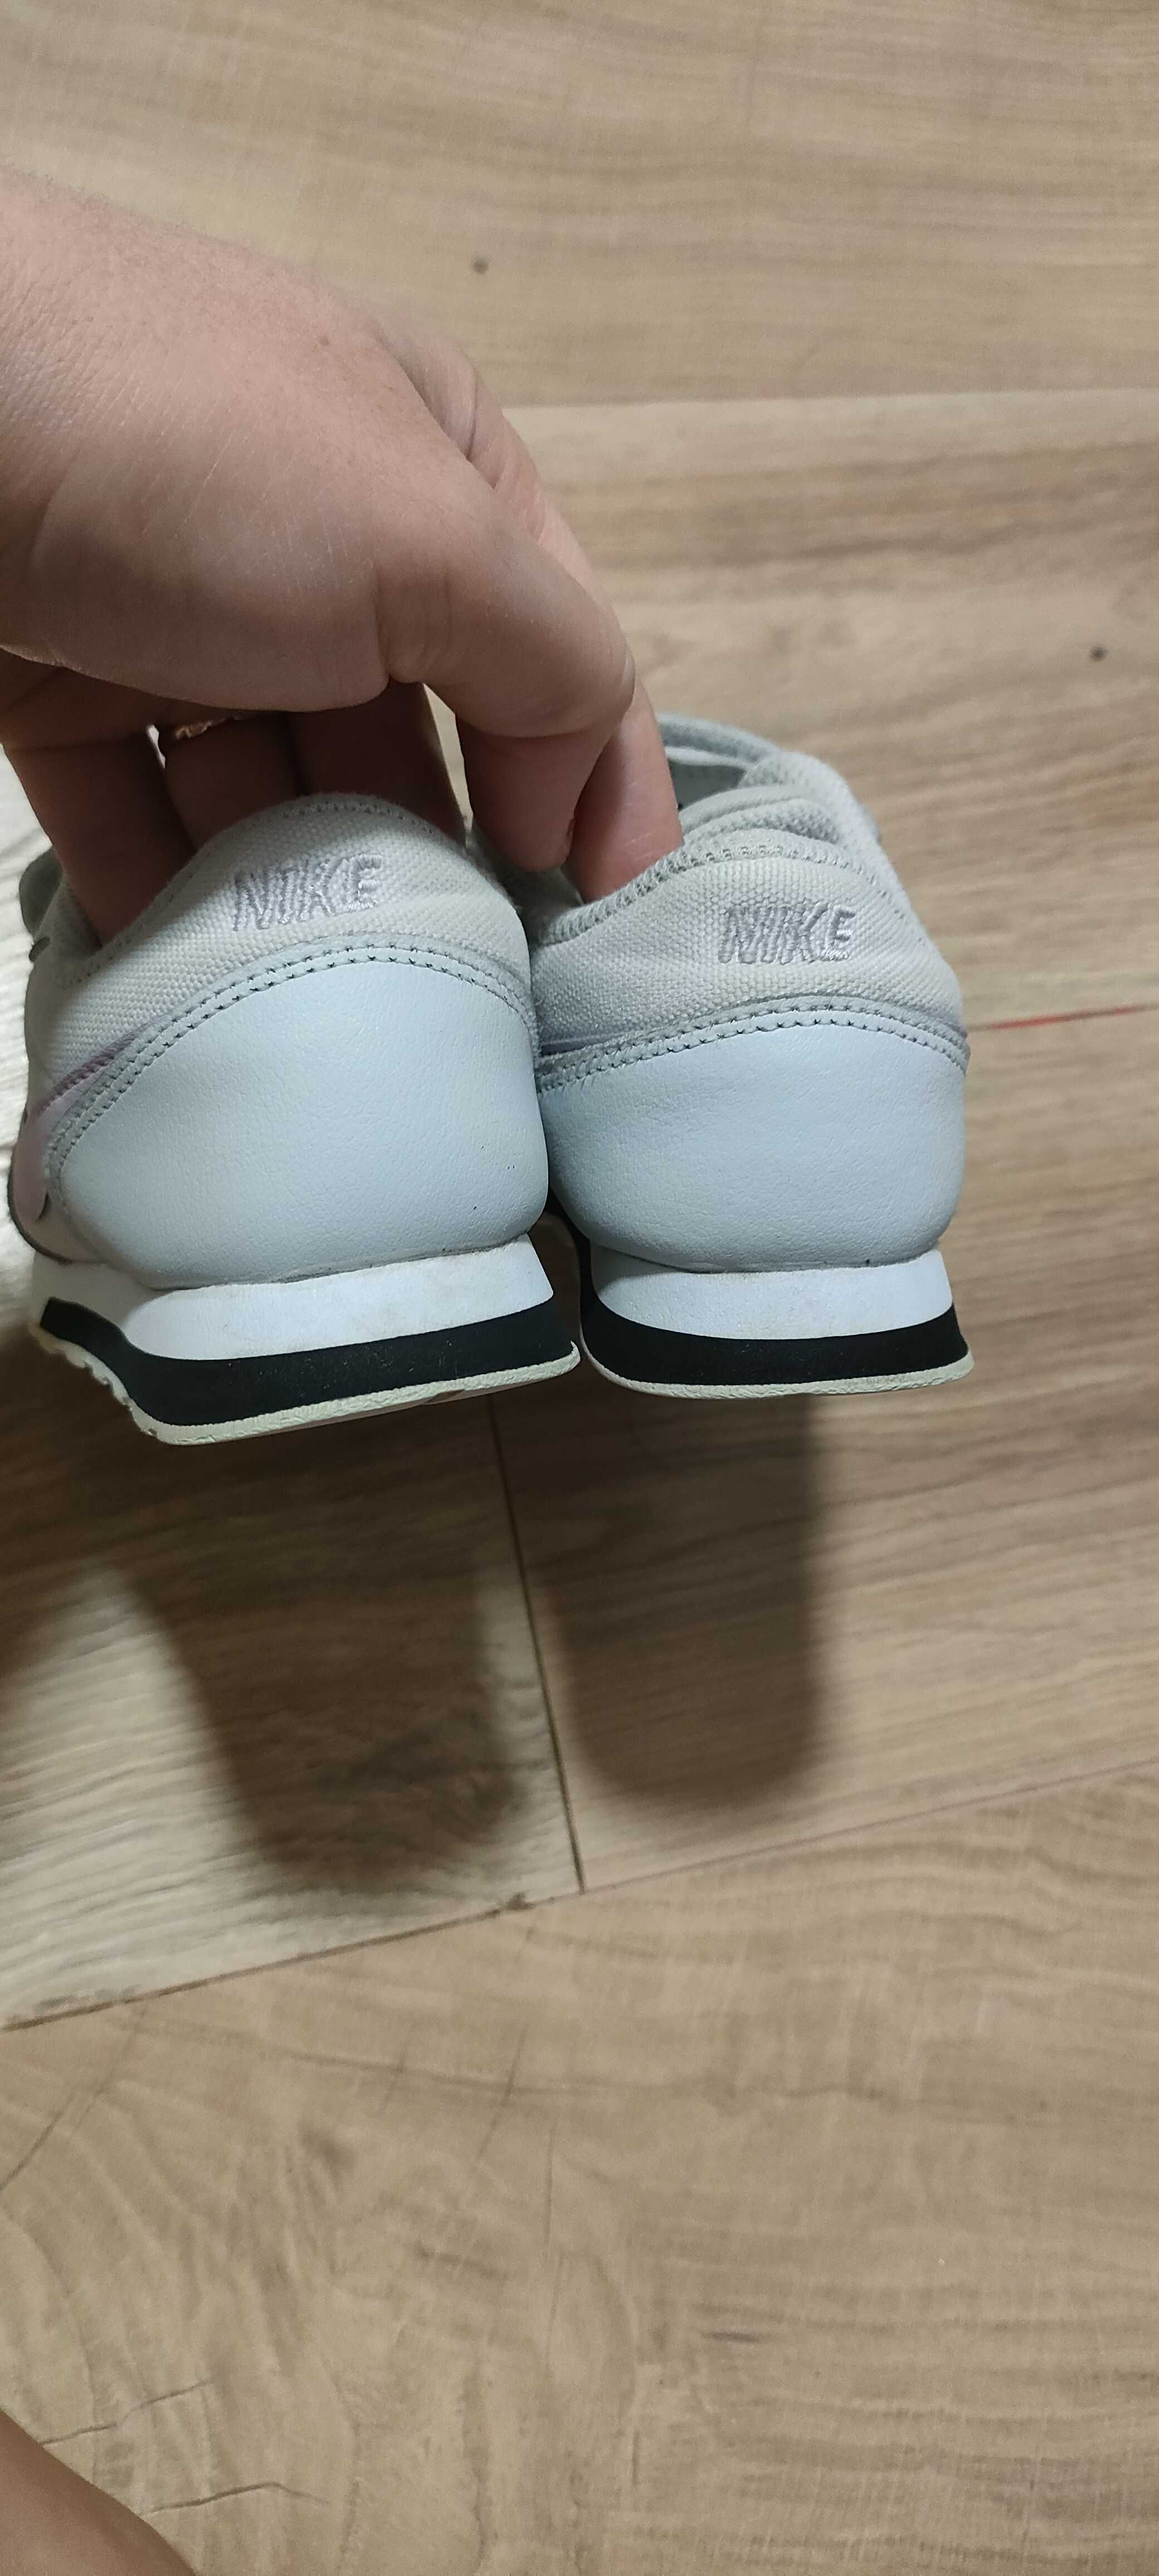 Buty dziecięce Nike MD Runner 2 TDV r. 26